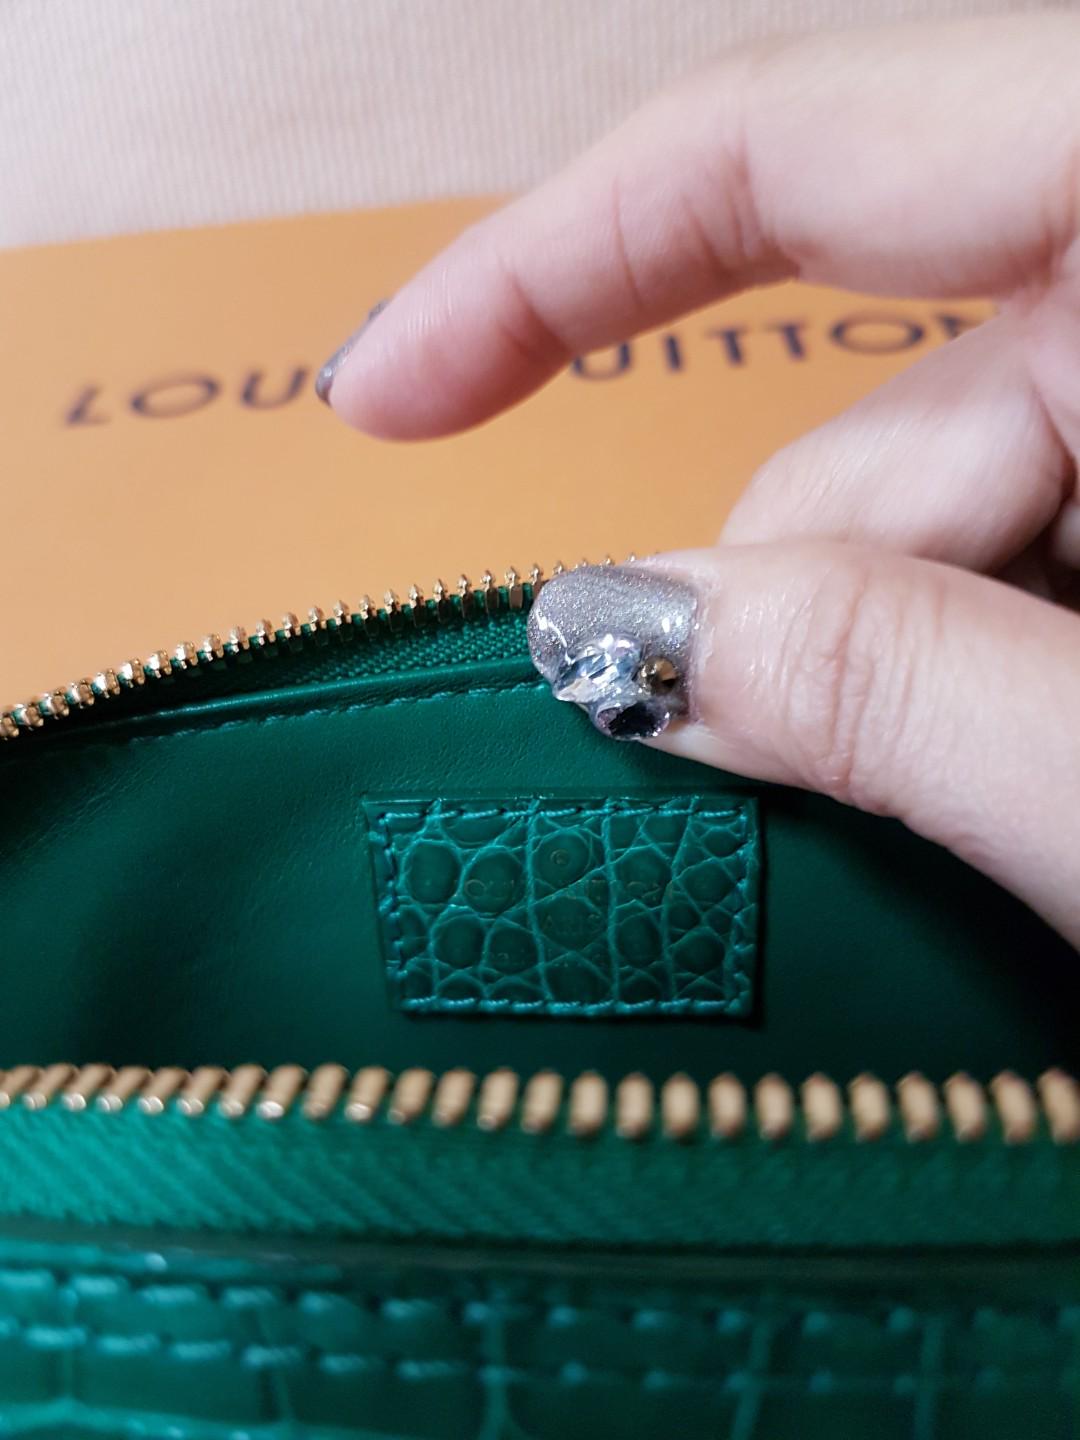 Alma crocodile handbag Louis Vuitton Black in Crocodile - 19278866